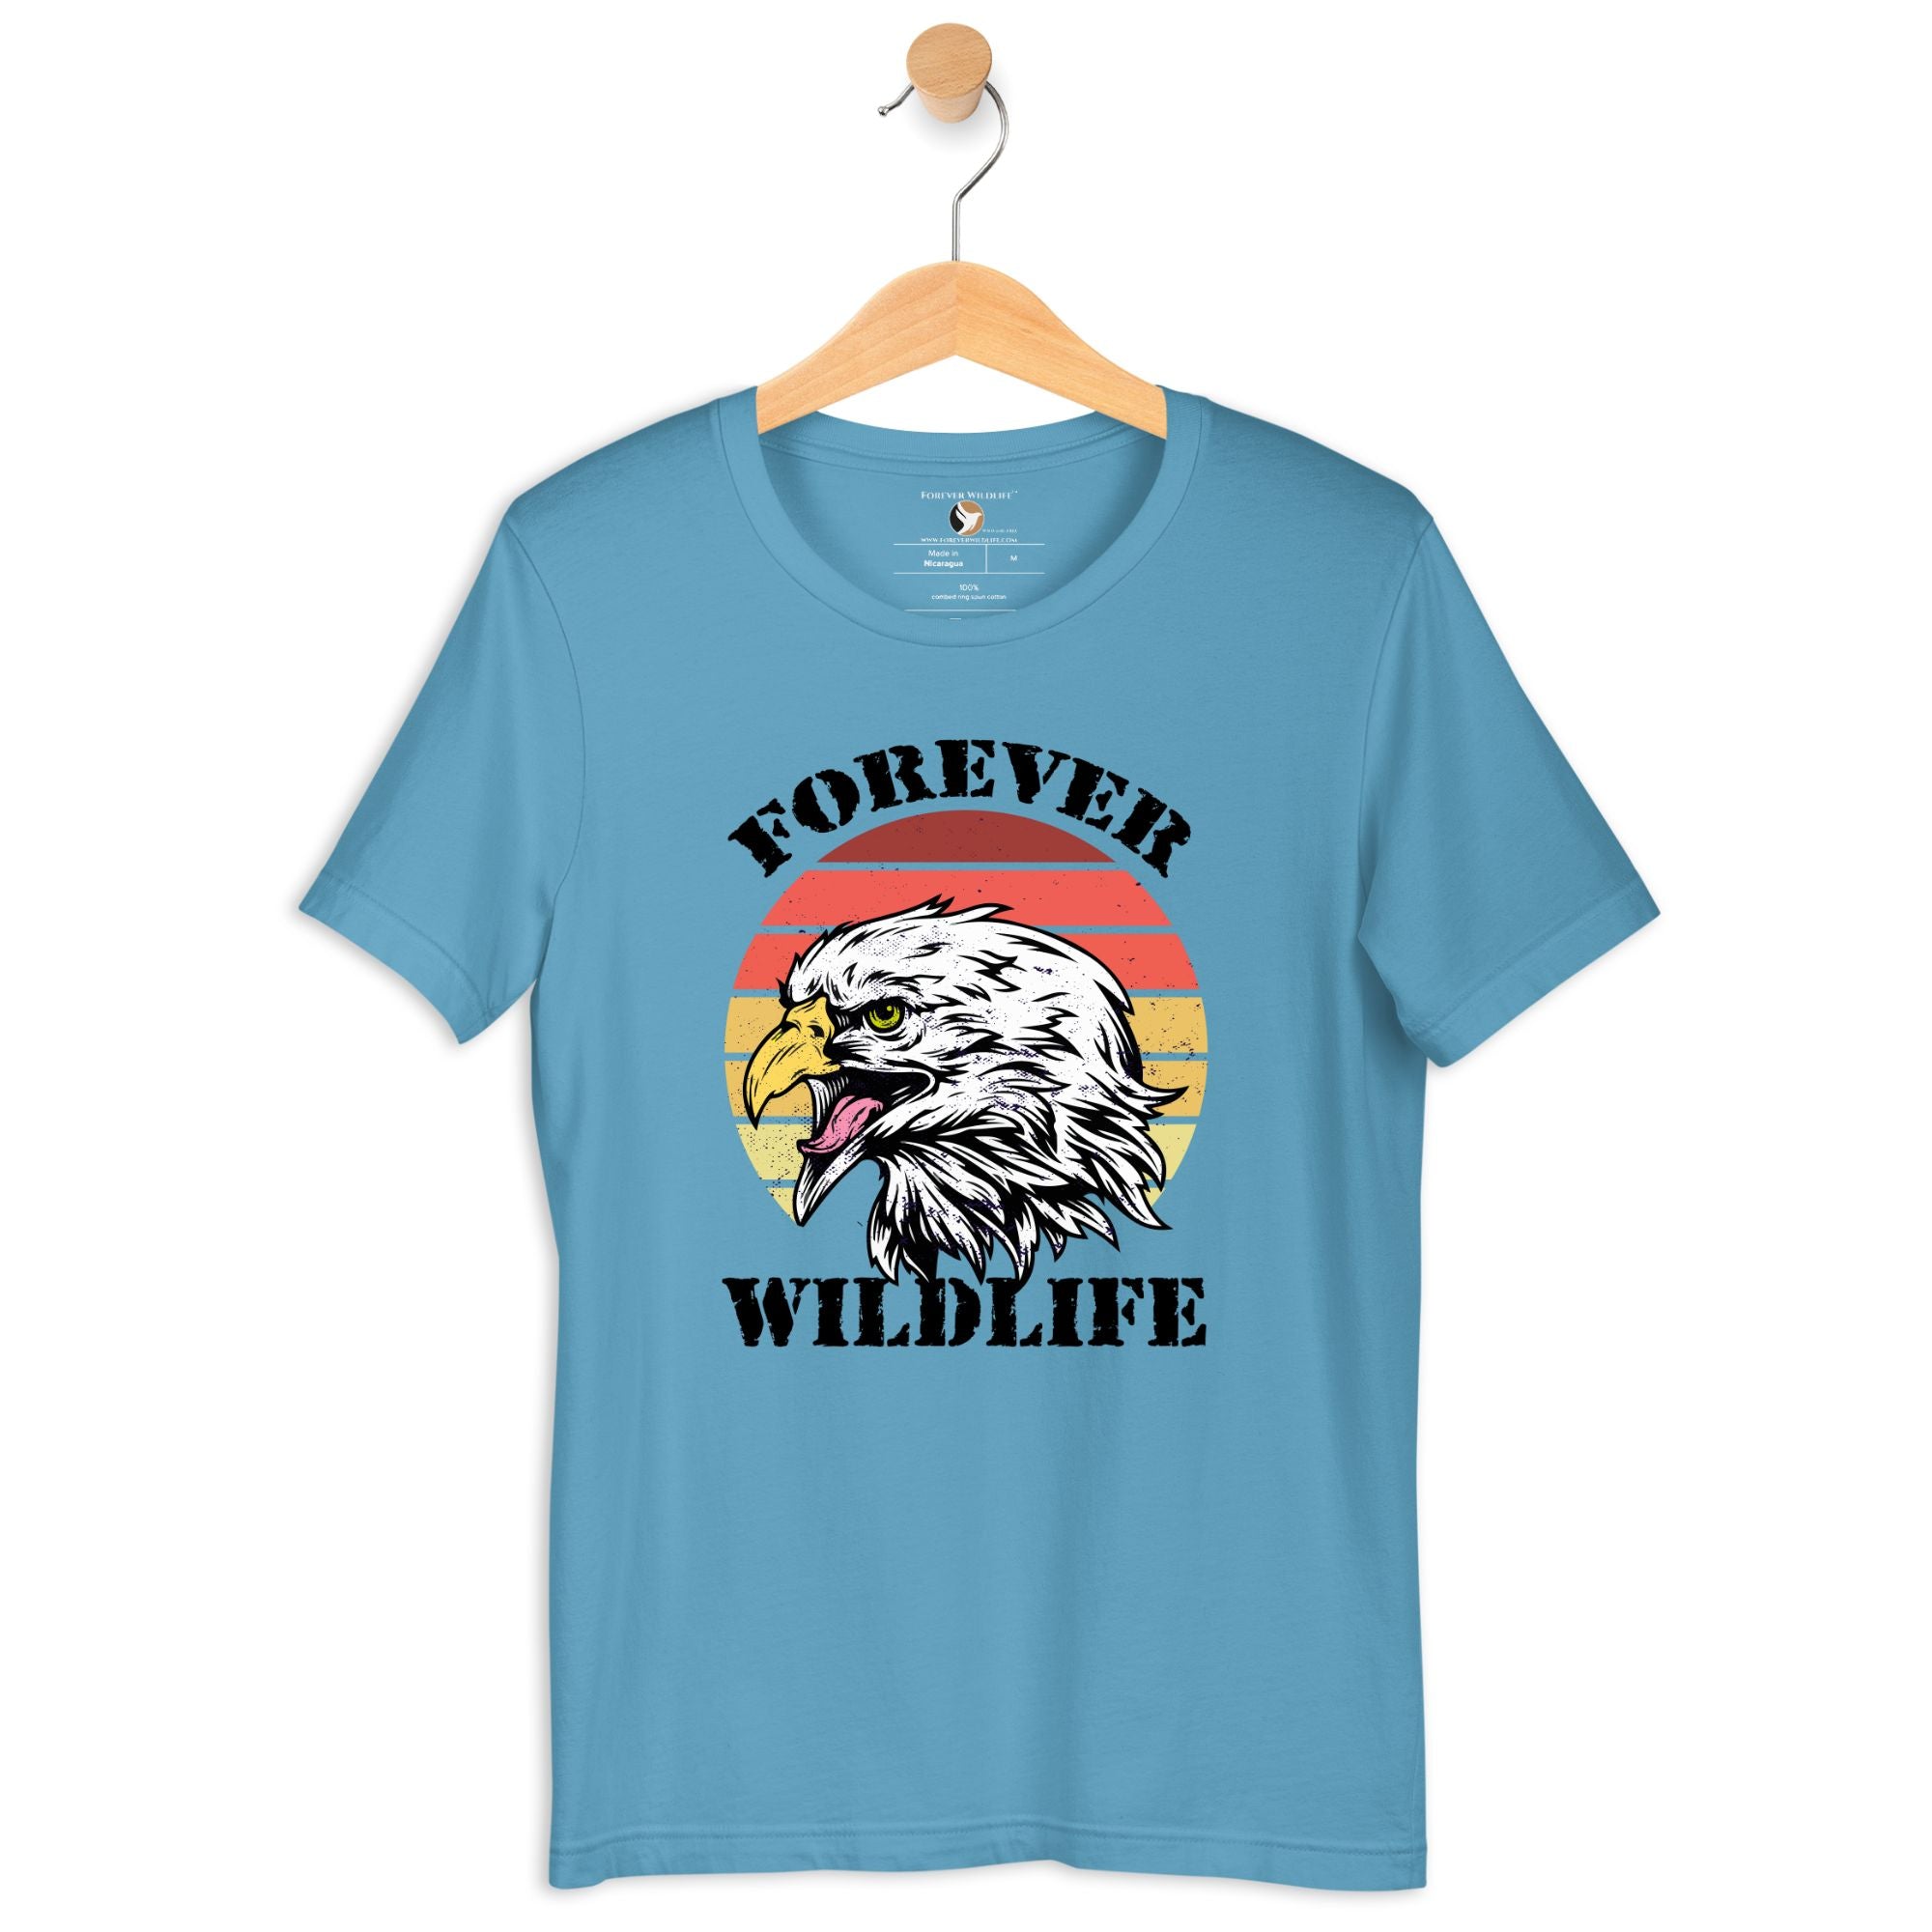 Eagle T-Shirt in Ocean Blue – Premium Wildlife T-Shirt Design, Eagle Shirts and Wildlife Apparel from Forever Wildlife